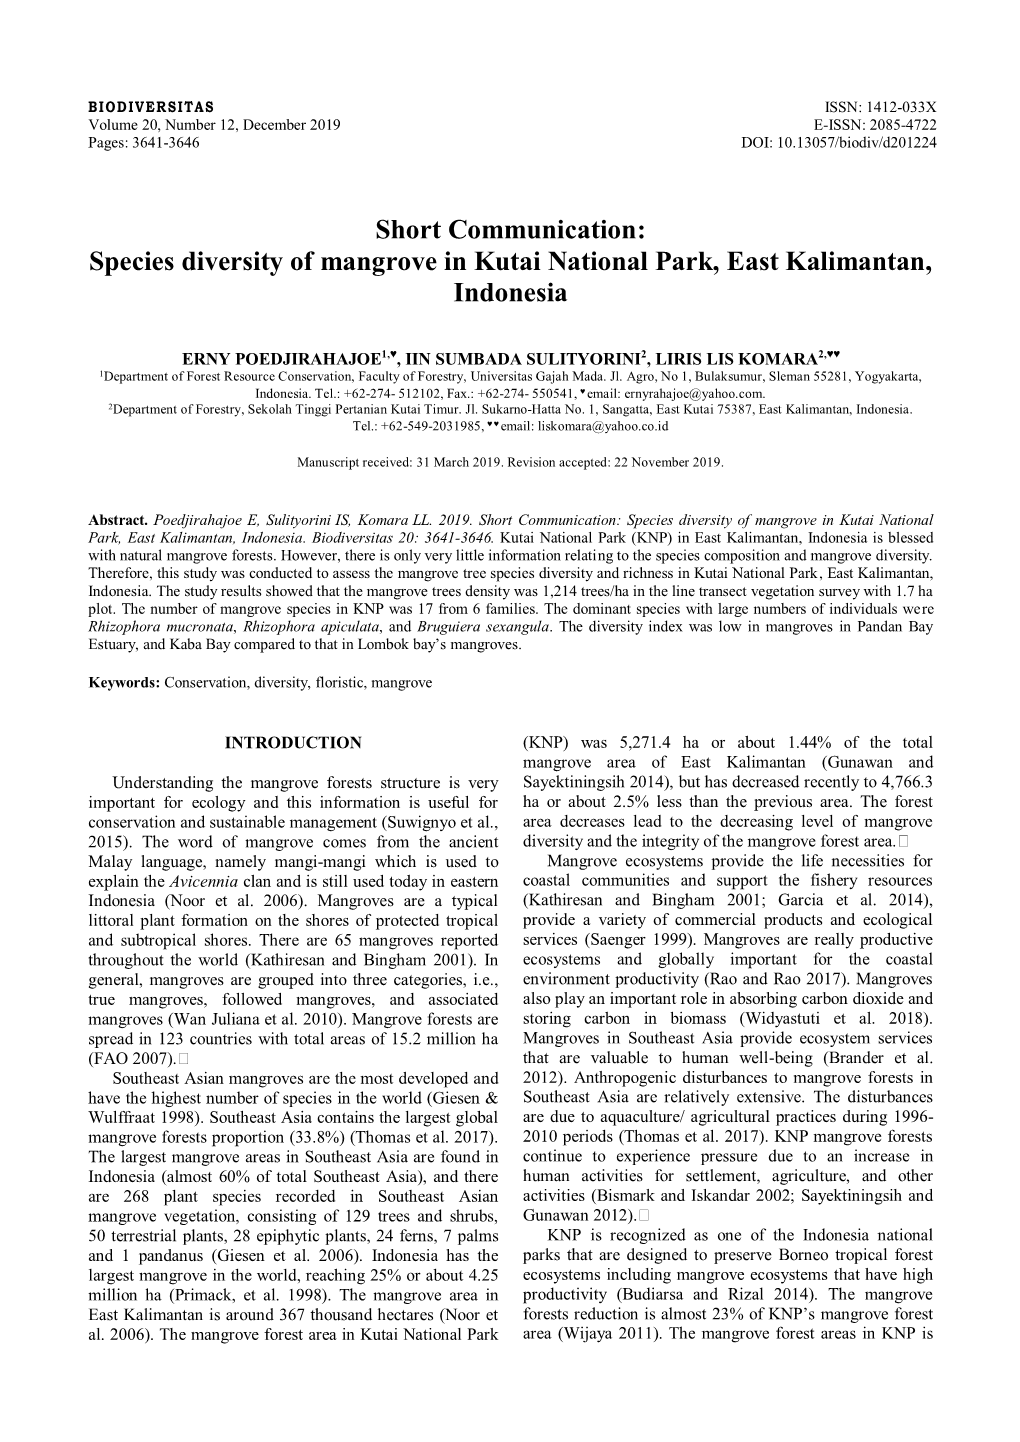 Species Diversity of Mangrove in Kutai National Park, East Kalimantan, Indonesia